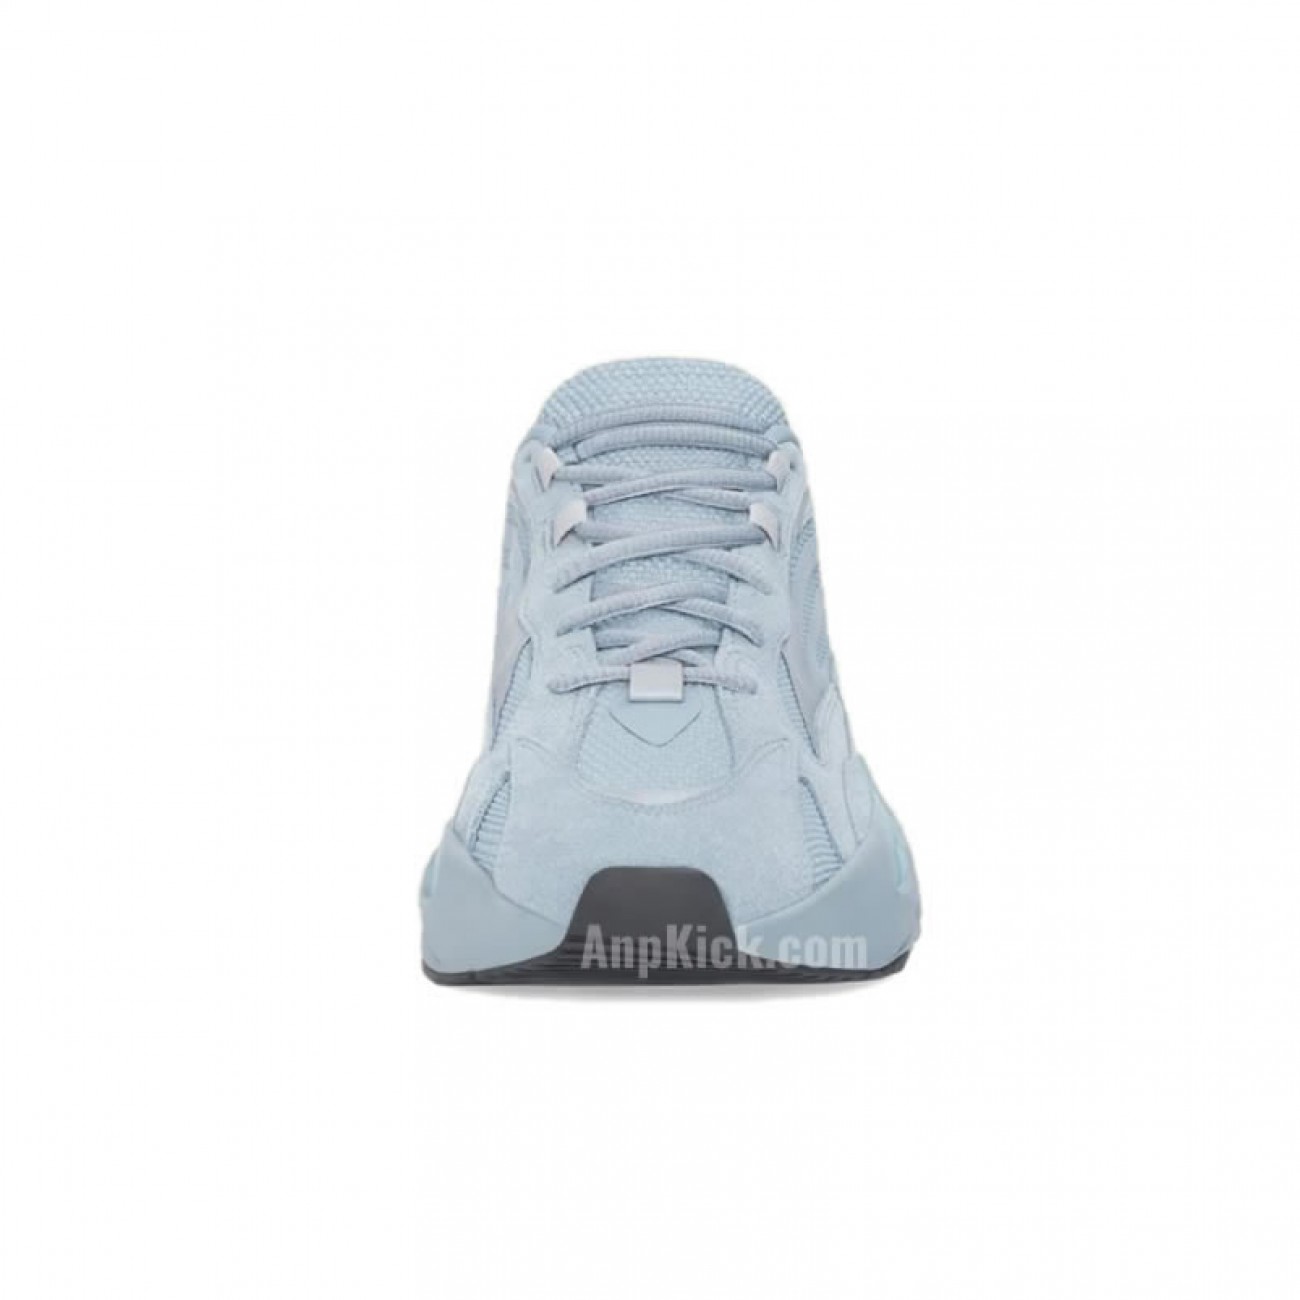 adidas Yeezy Boost 700 "Hospital Blue" On Feet Release Date FV8424